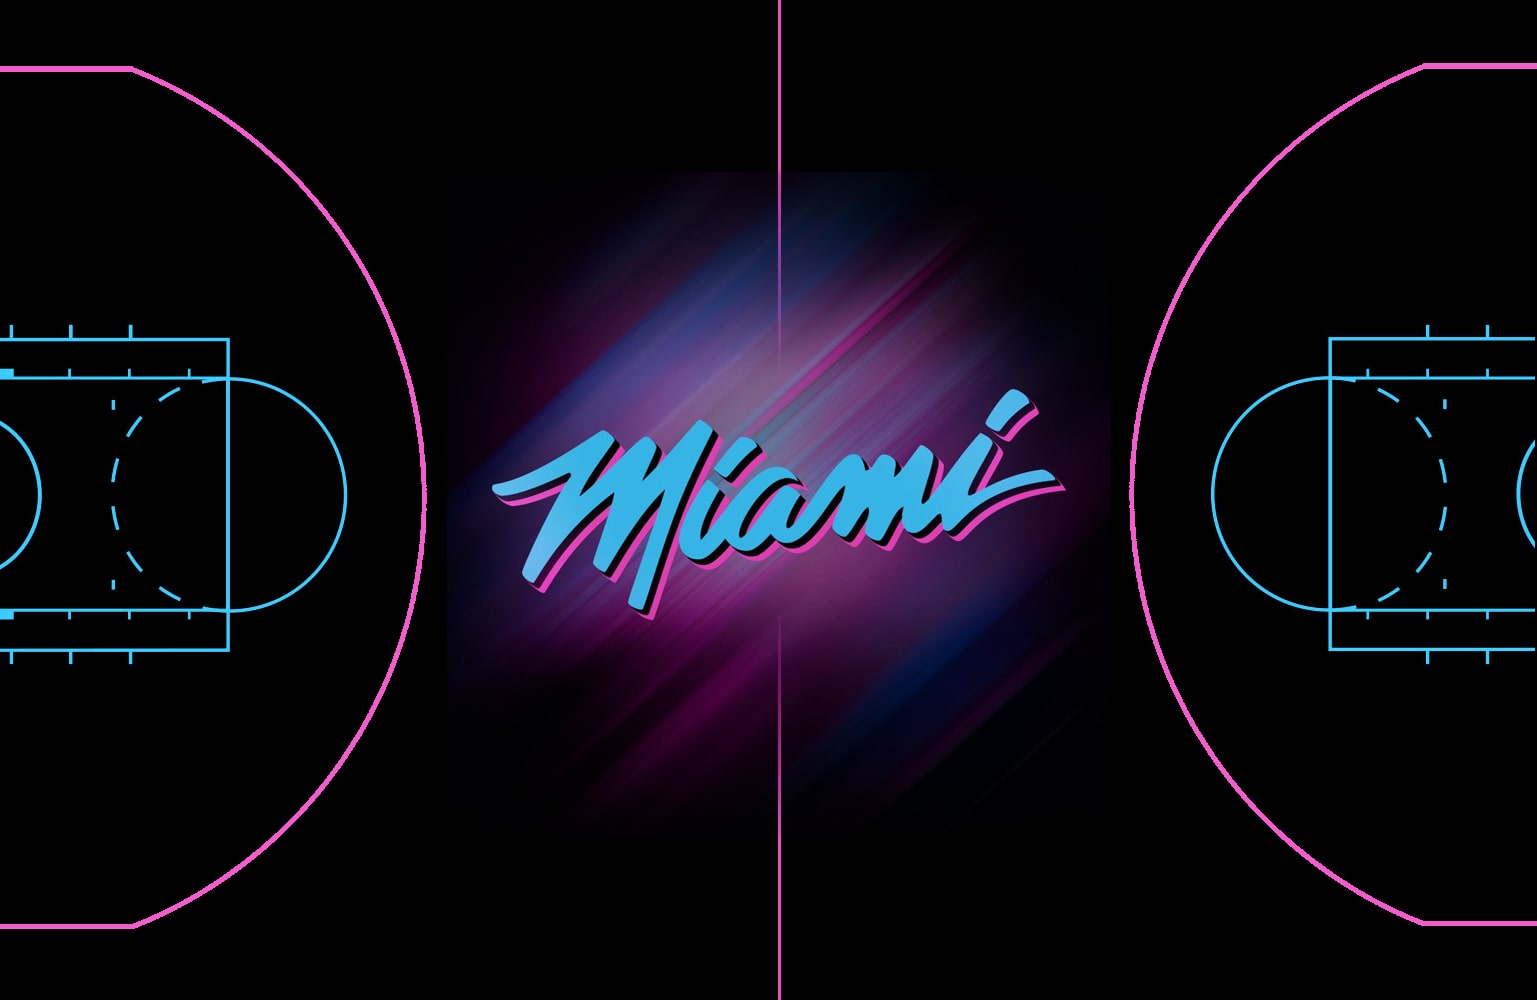 Miami Heat Wallpaper 2